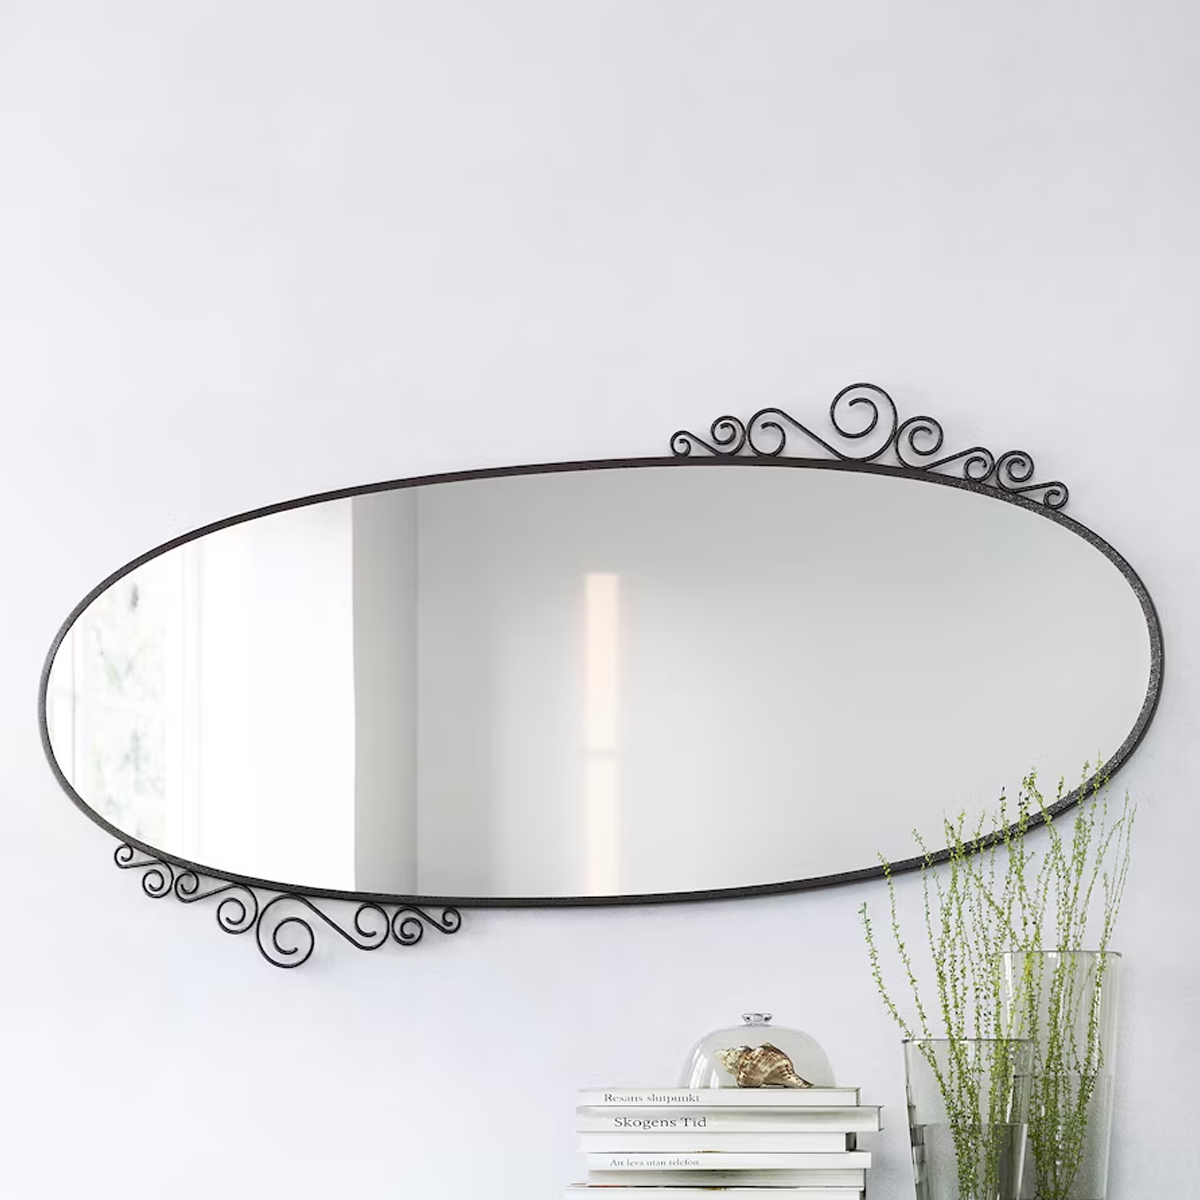 EKNE 70x150cm zidno ogledalo, ovalno